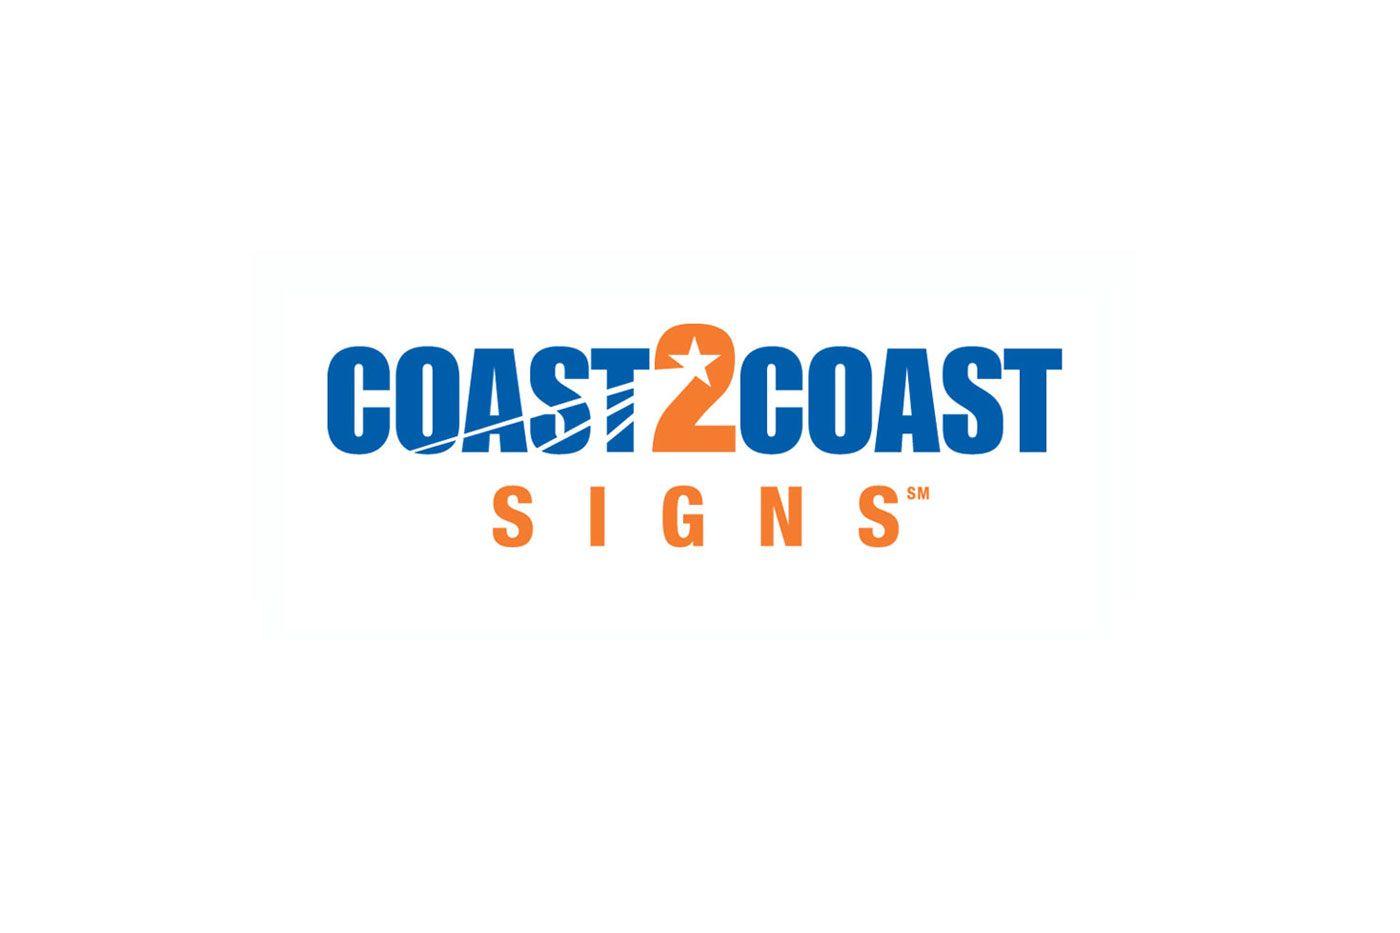 Signs Logo - Coast2Coast Signs logo